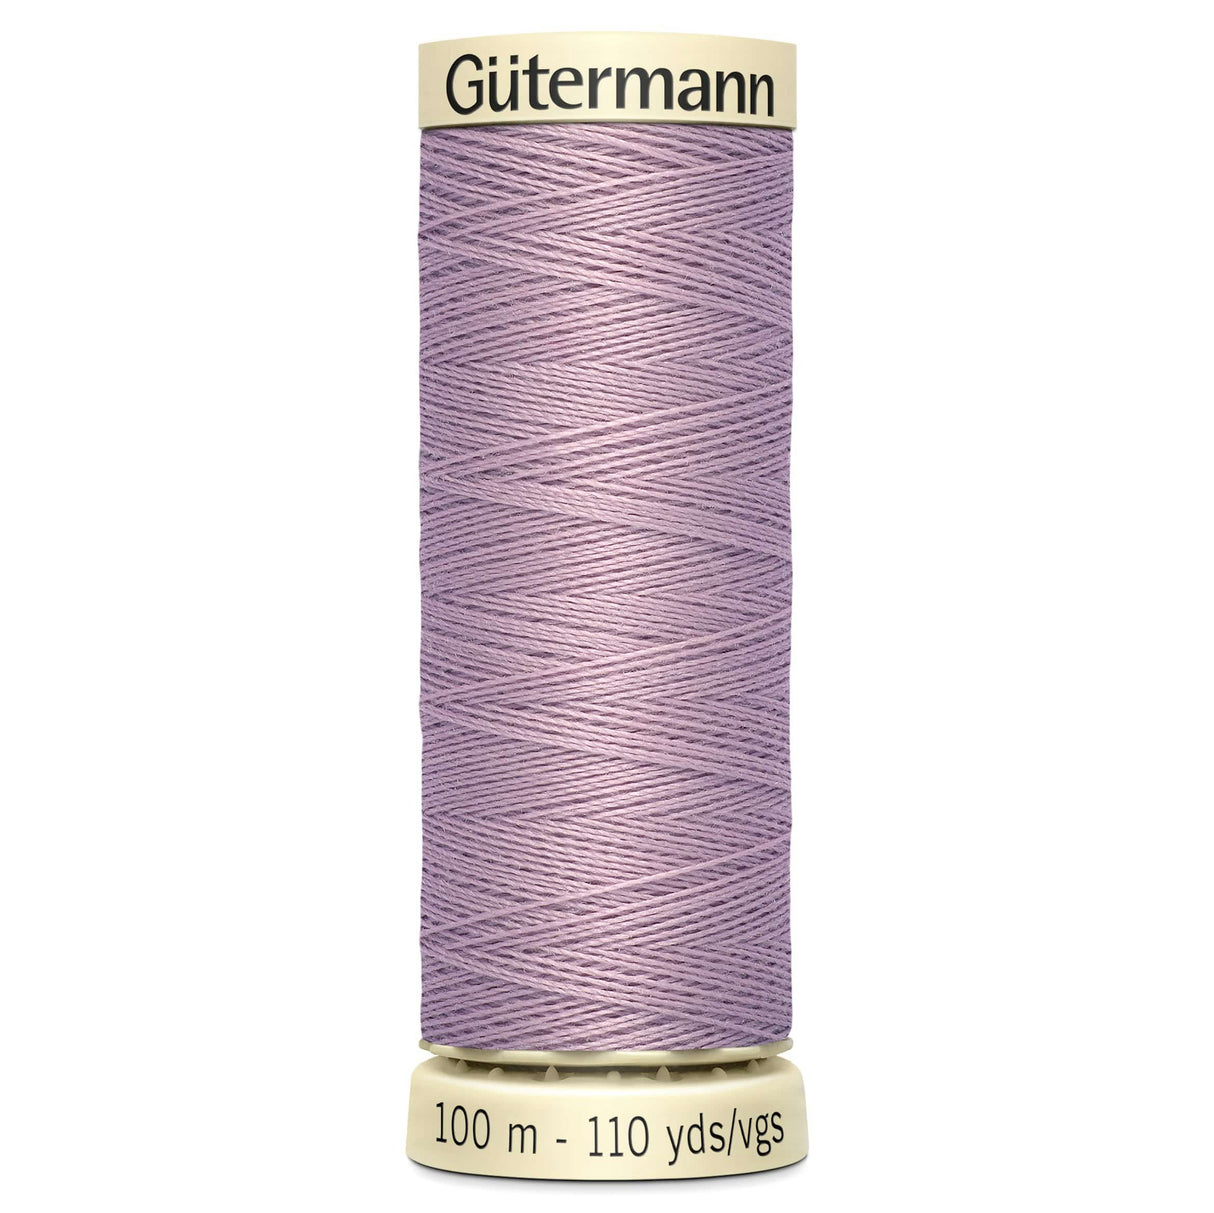 Groves Haberdashery 568 Gutermann Thread Sewing Cotton 100 m Black to Pink